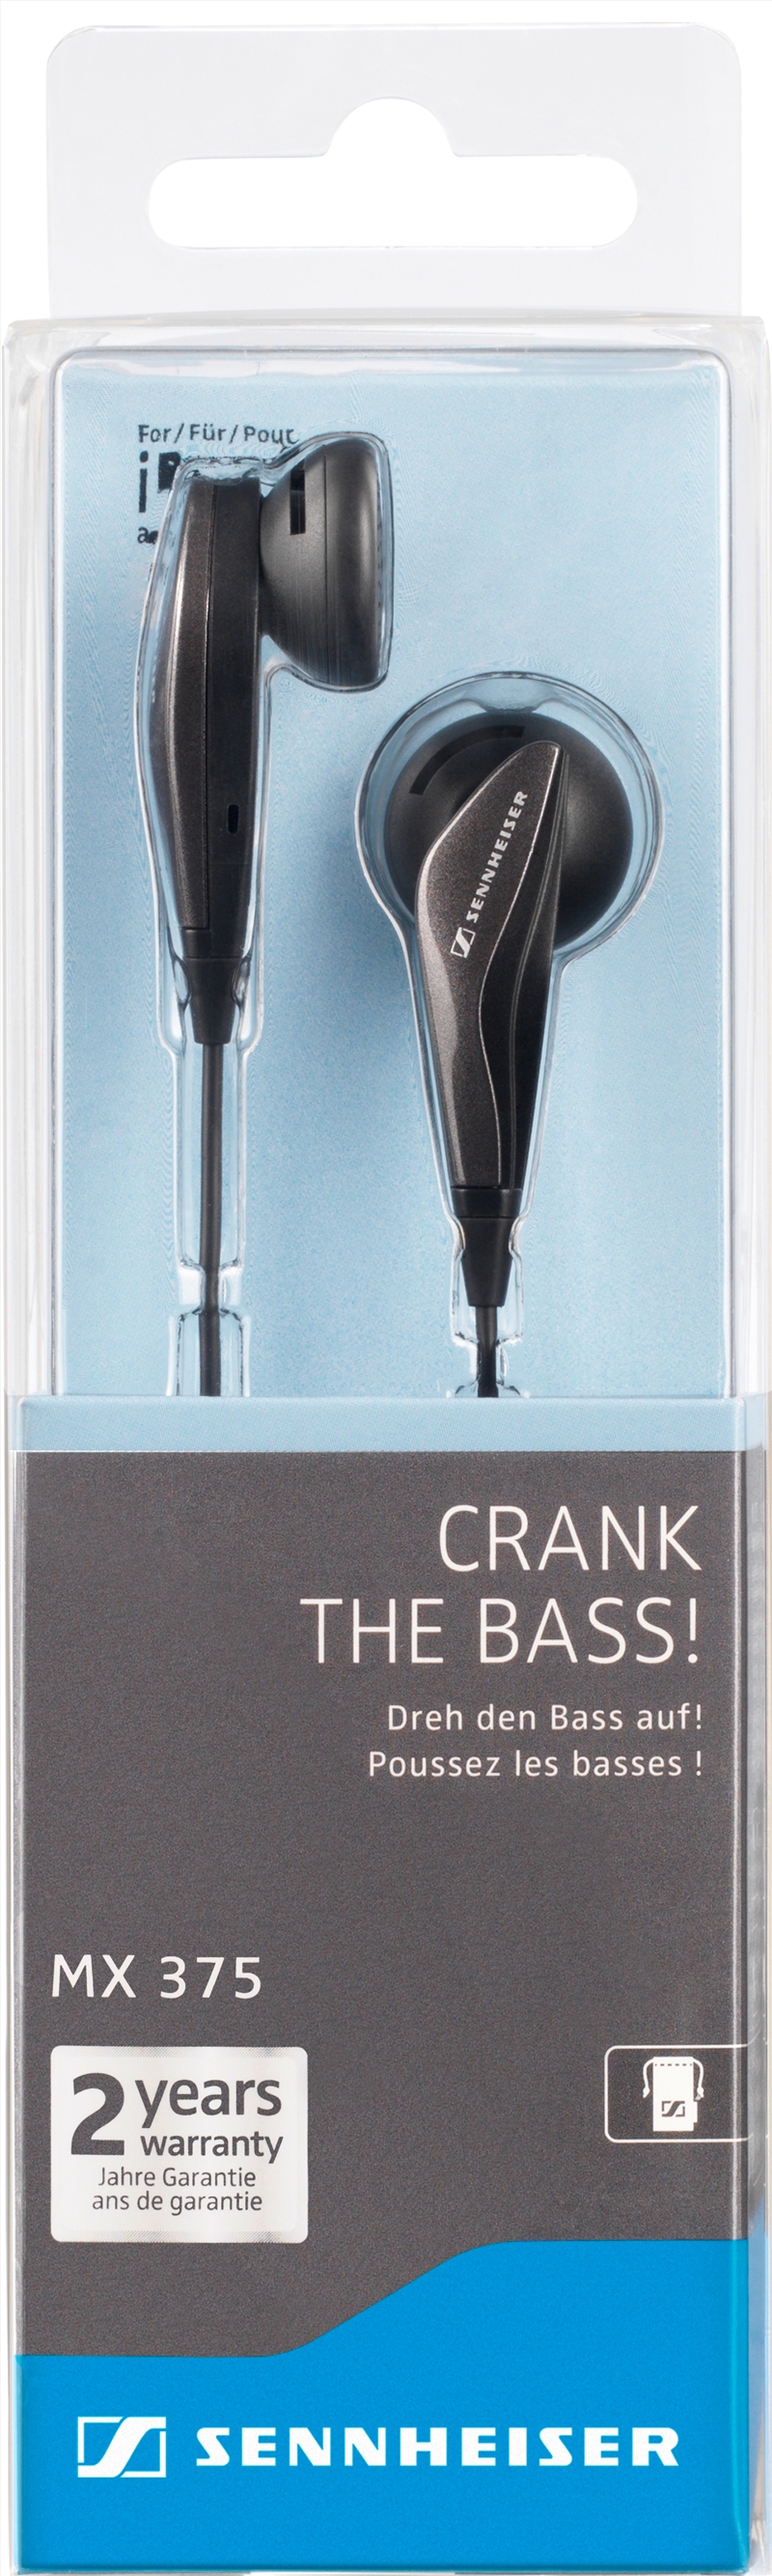 Sennheiser MX 375: Crank The Bass Earphones/Product Detail/Headphones